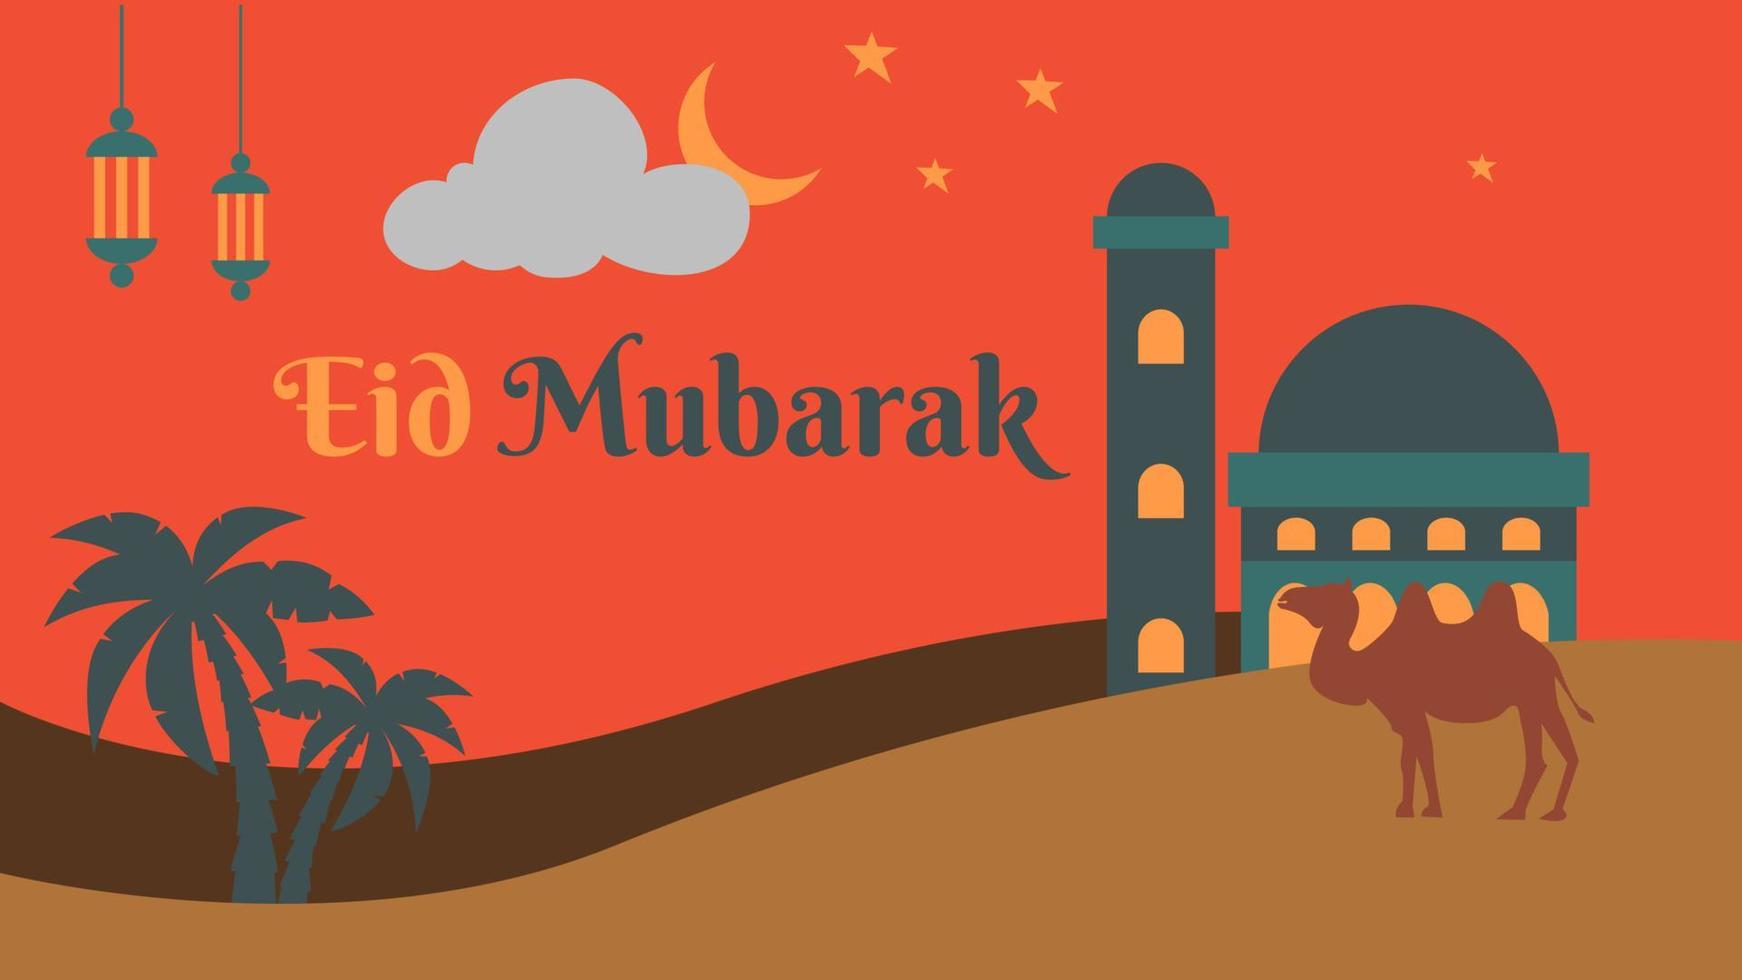 fond eid mubarak avec style bohème vecteur